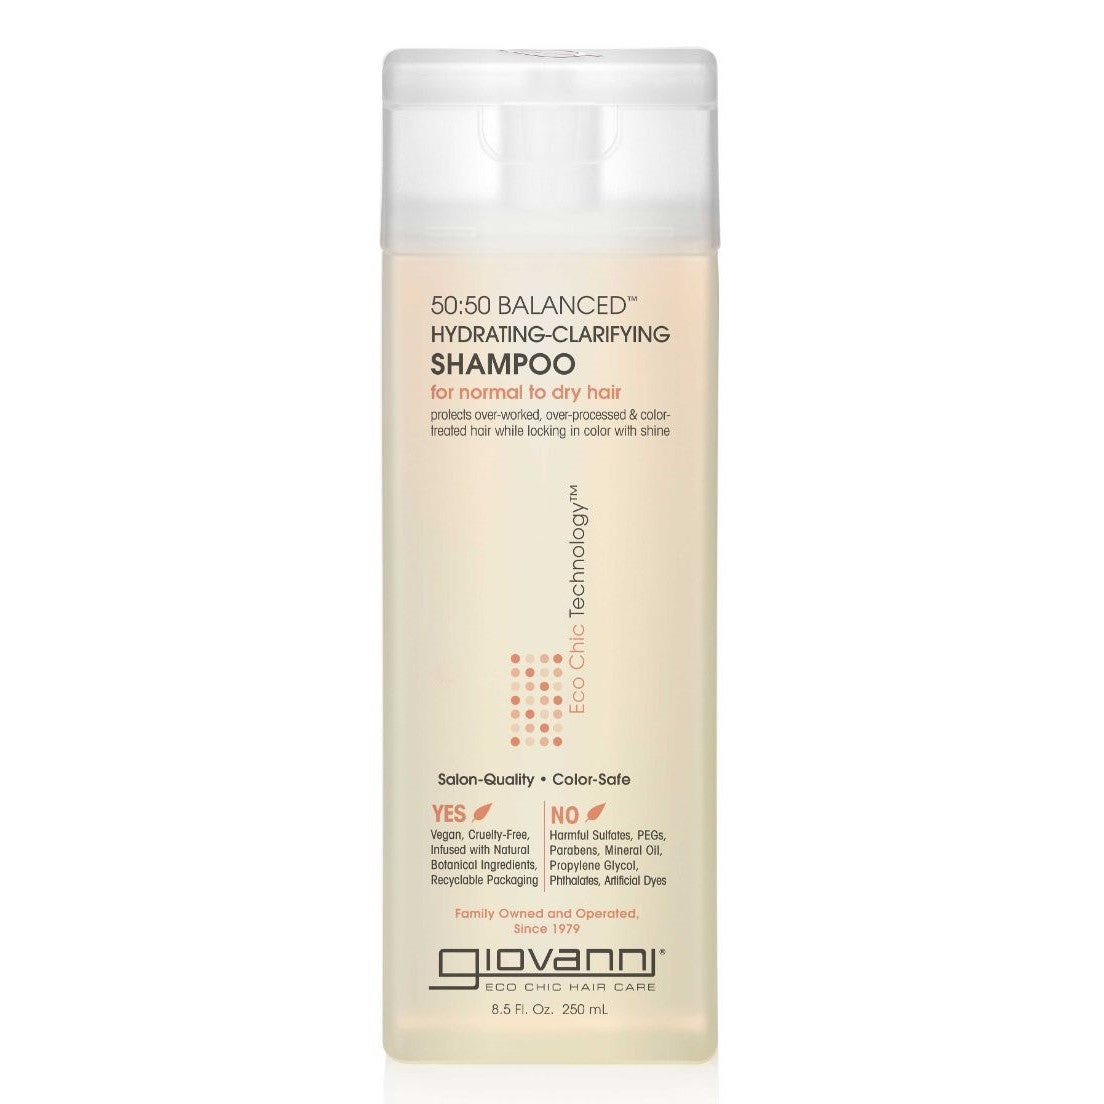 Giovanni 50:50 Balanced Hydrating-Clarifying Shampoo 8.5oz / 250ml